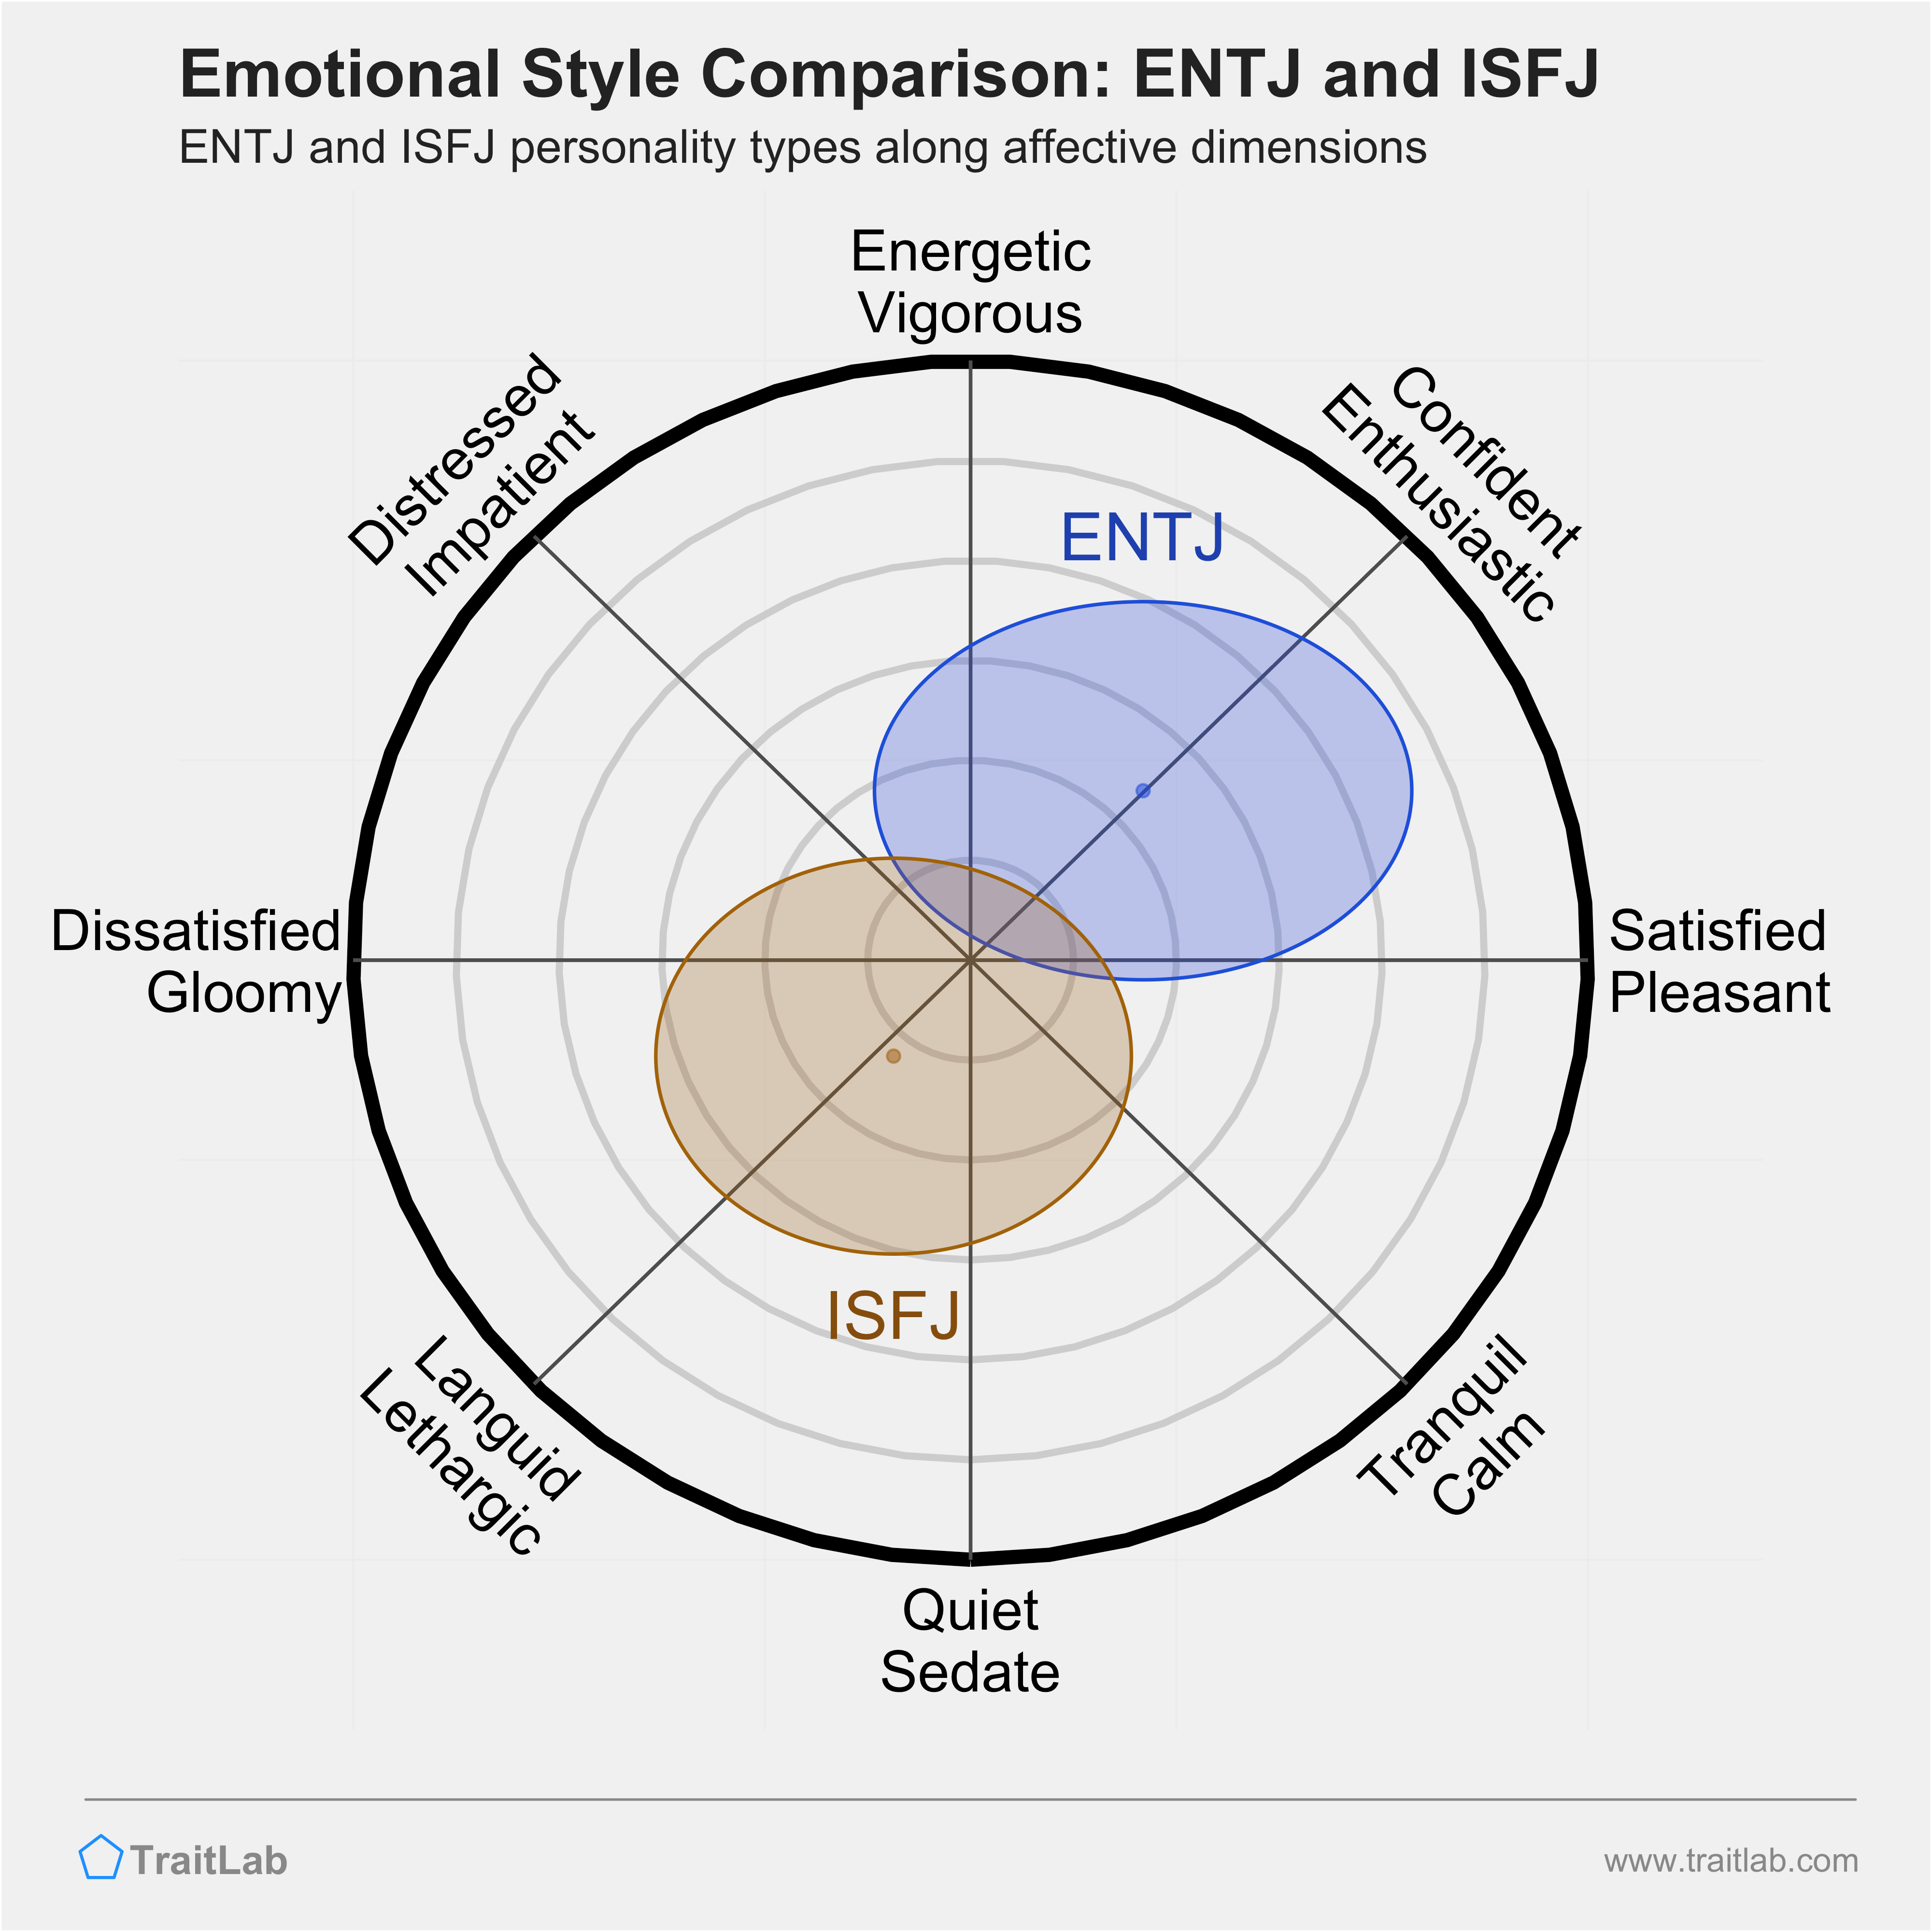 ENTJ and ISFJ comparison across emotional (affective) dimensions